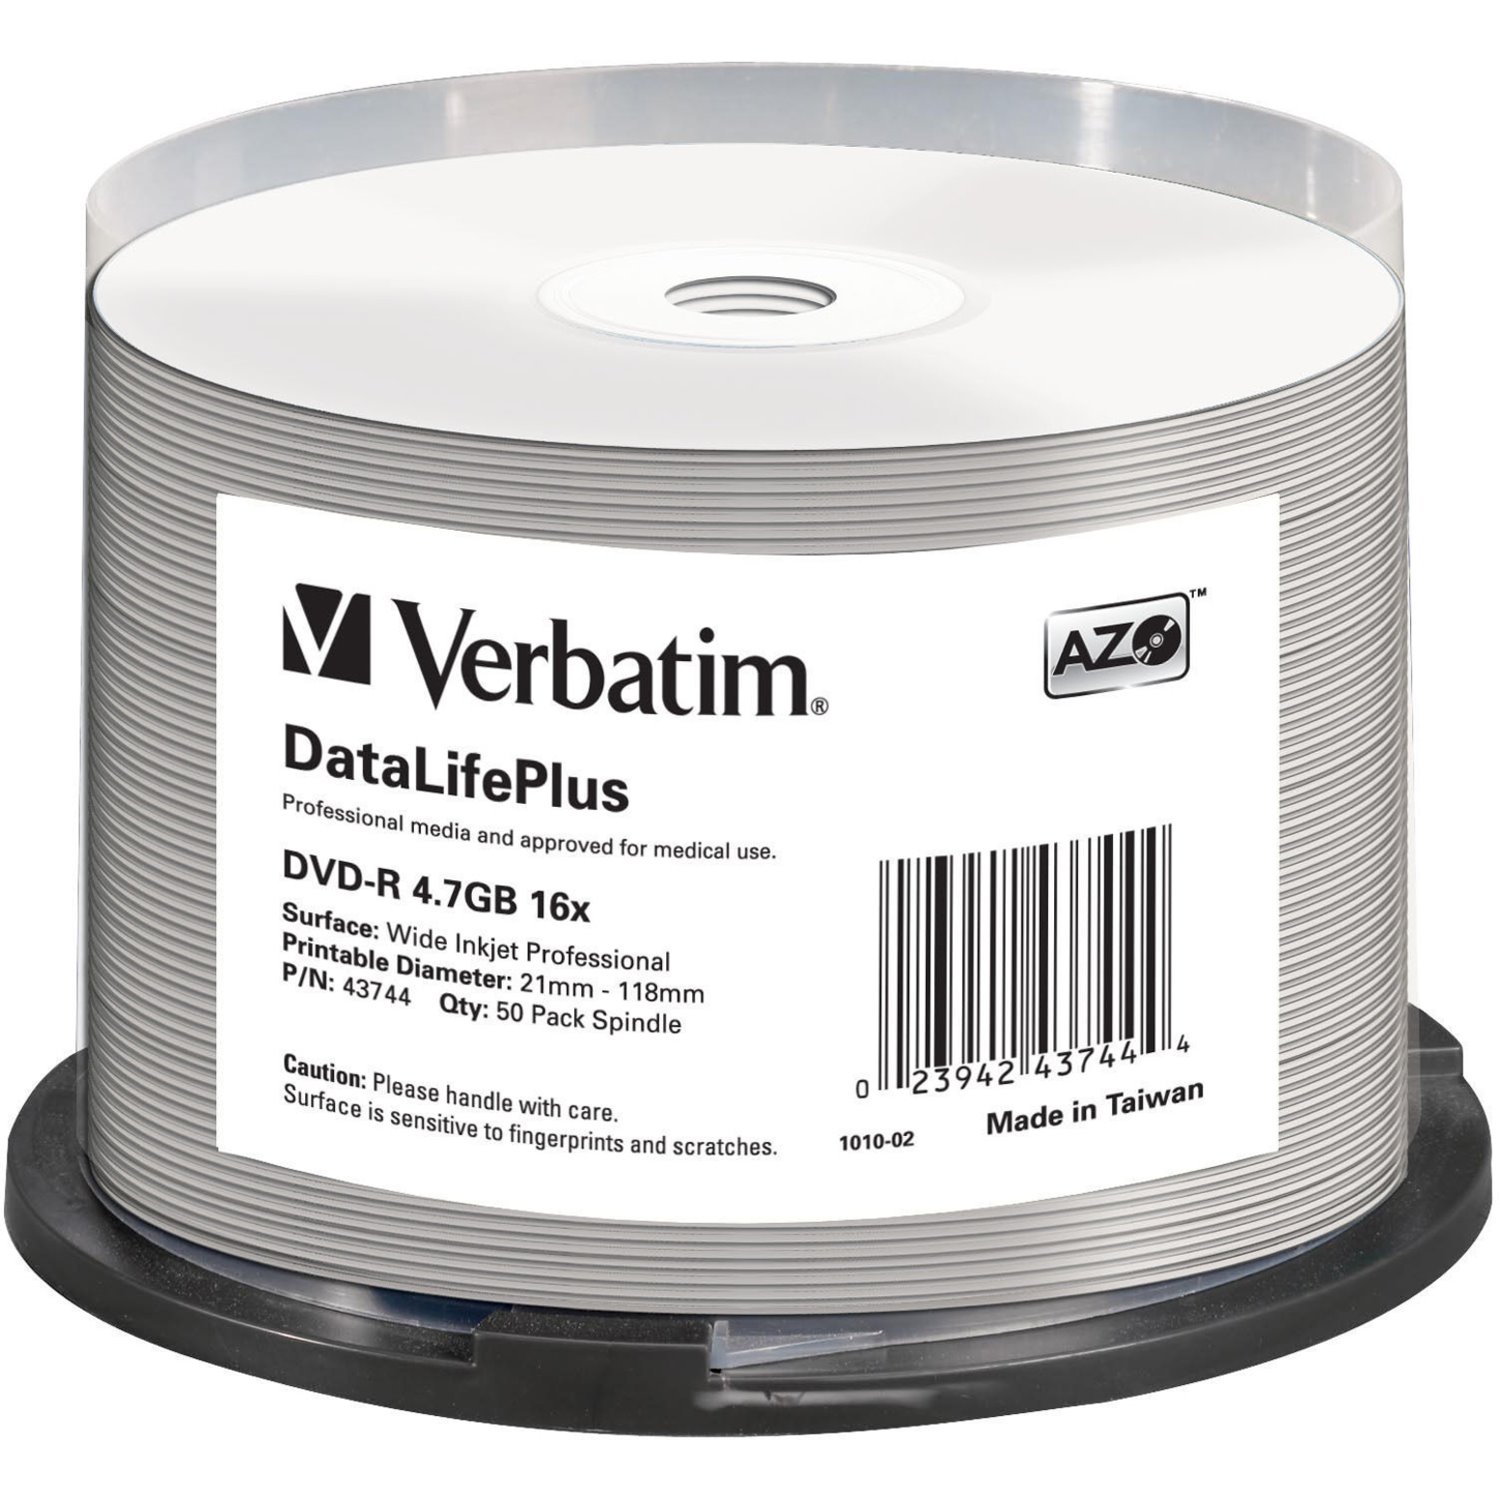 Verbatim DataLifePlus 43744 DVD Recordable Media - DVD-R - 16x - 4.70 GB - 50 Pack Spindle - White